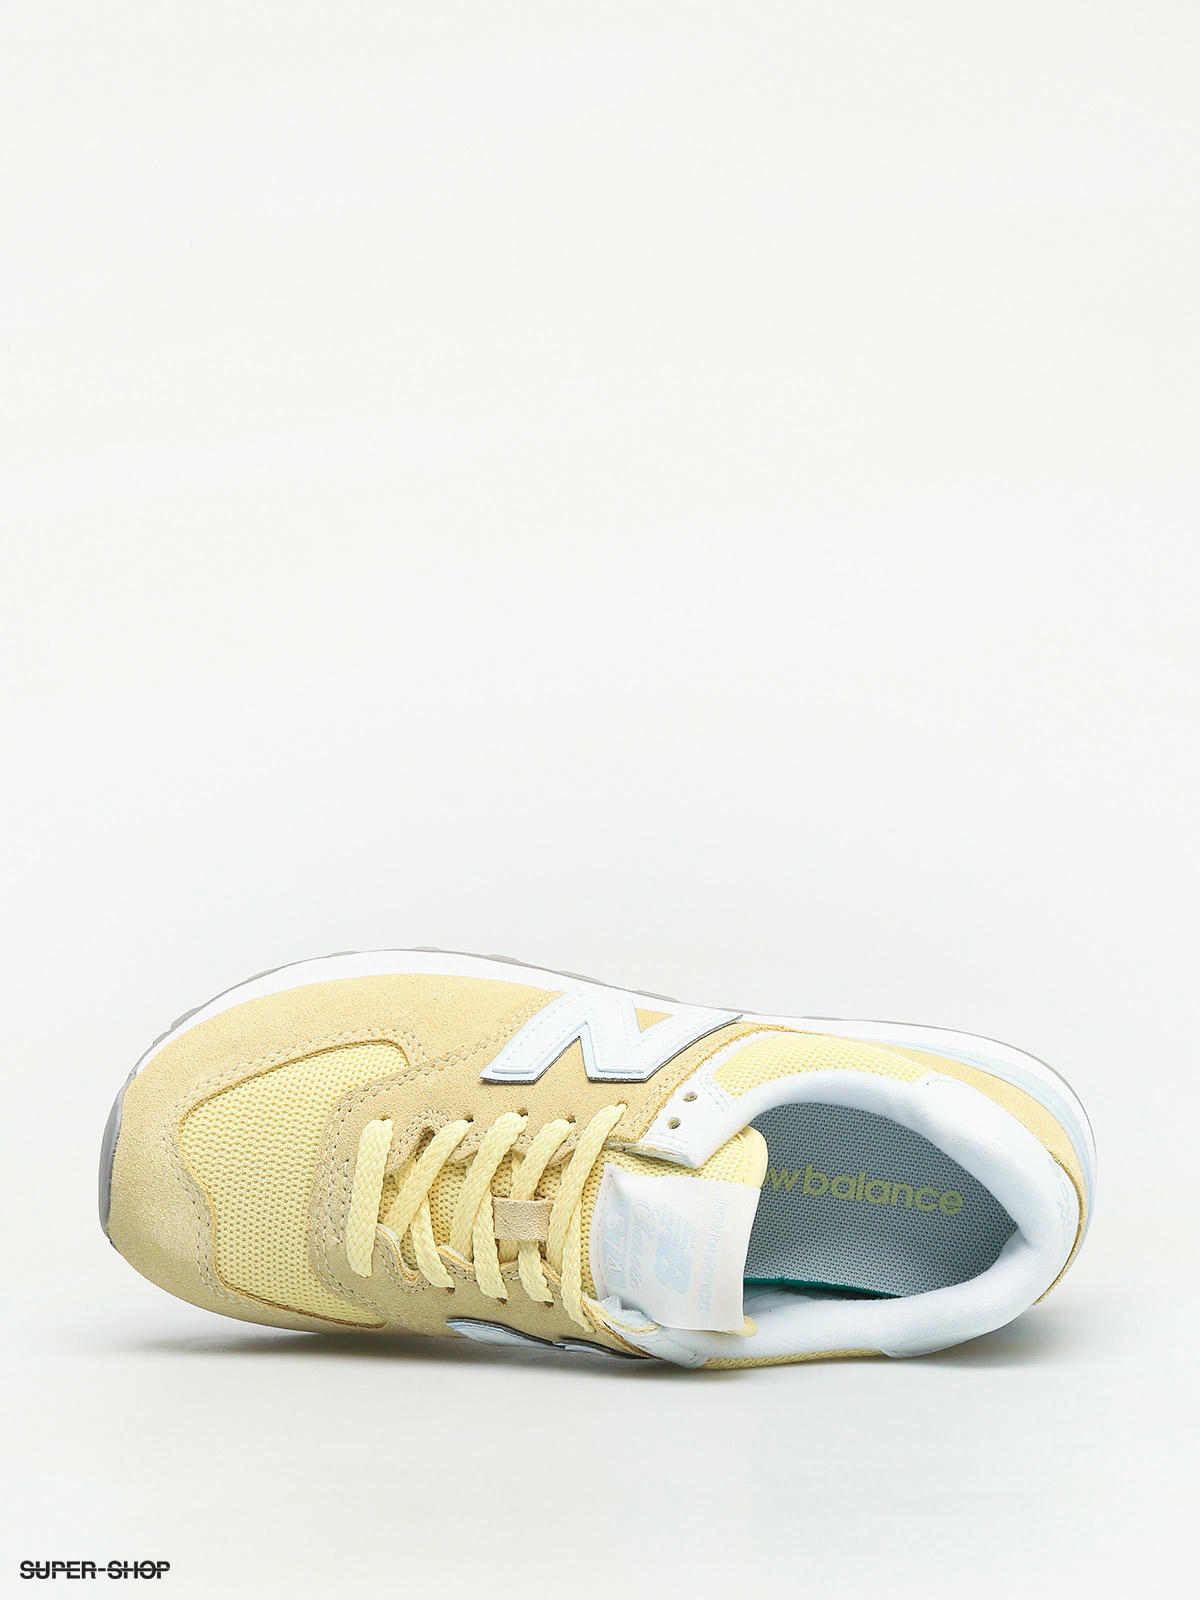 New Balance 574 Shoes Wmn (sun glow)